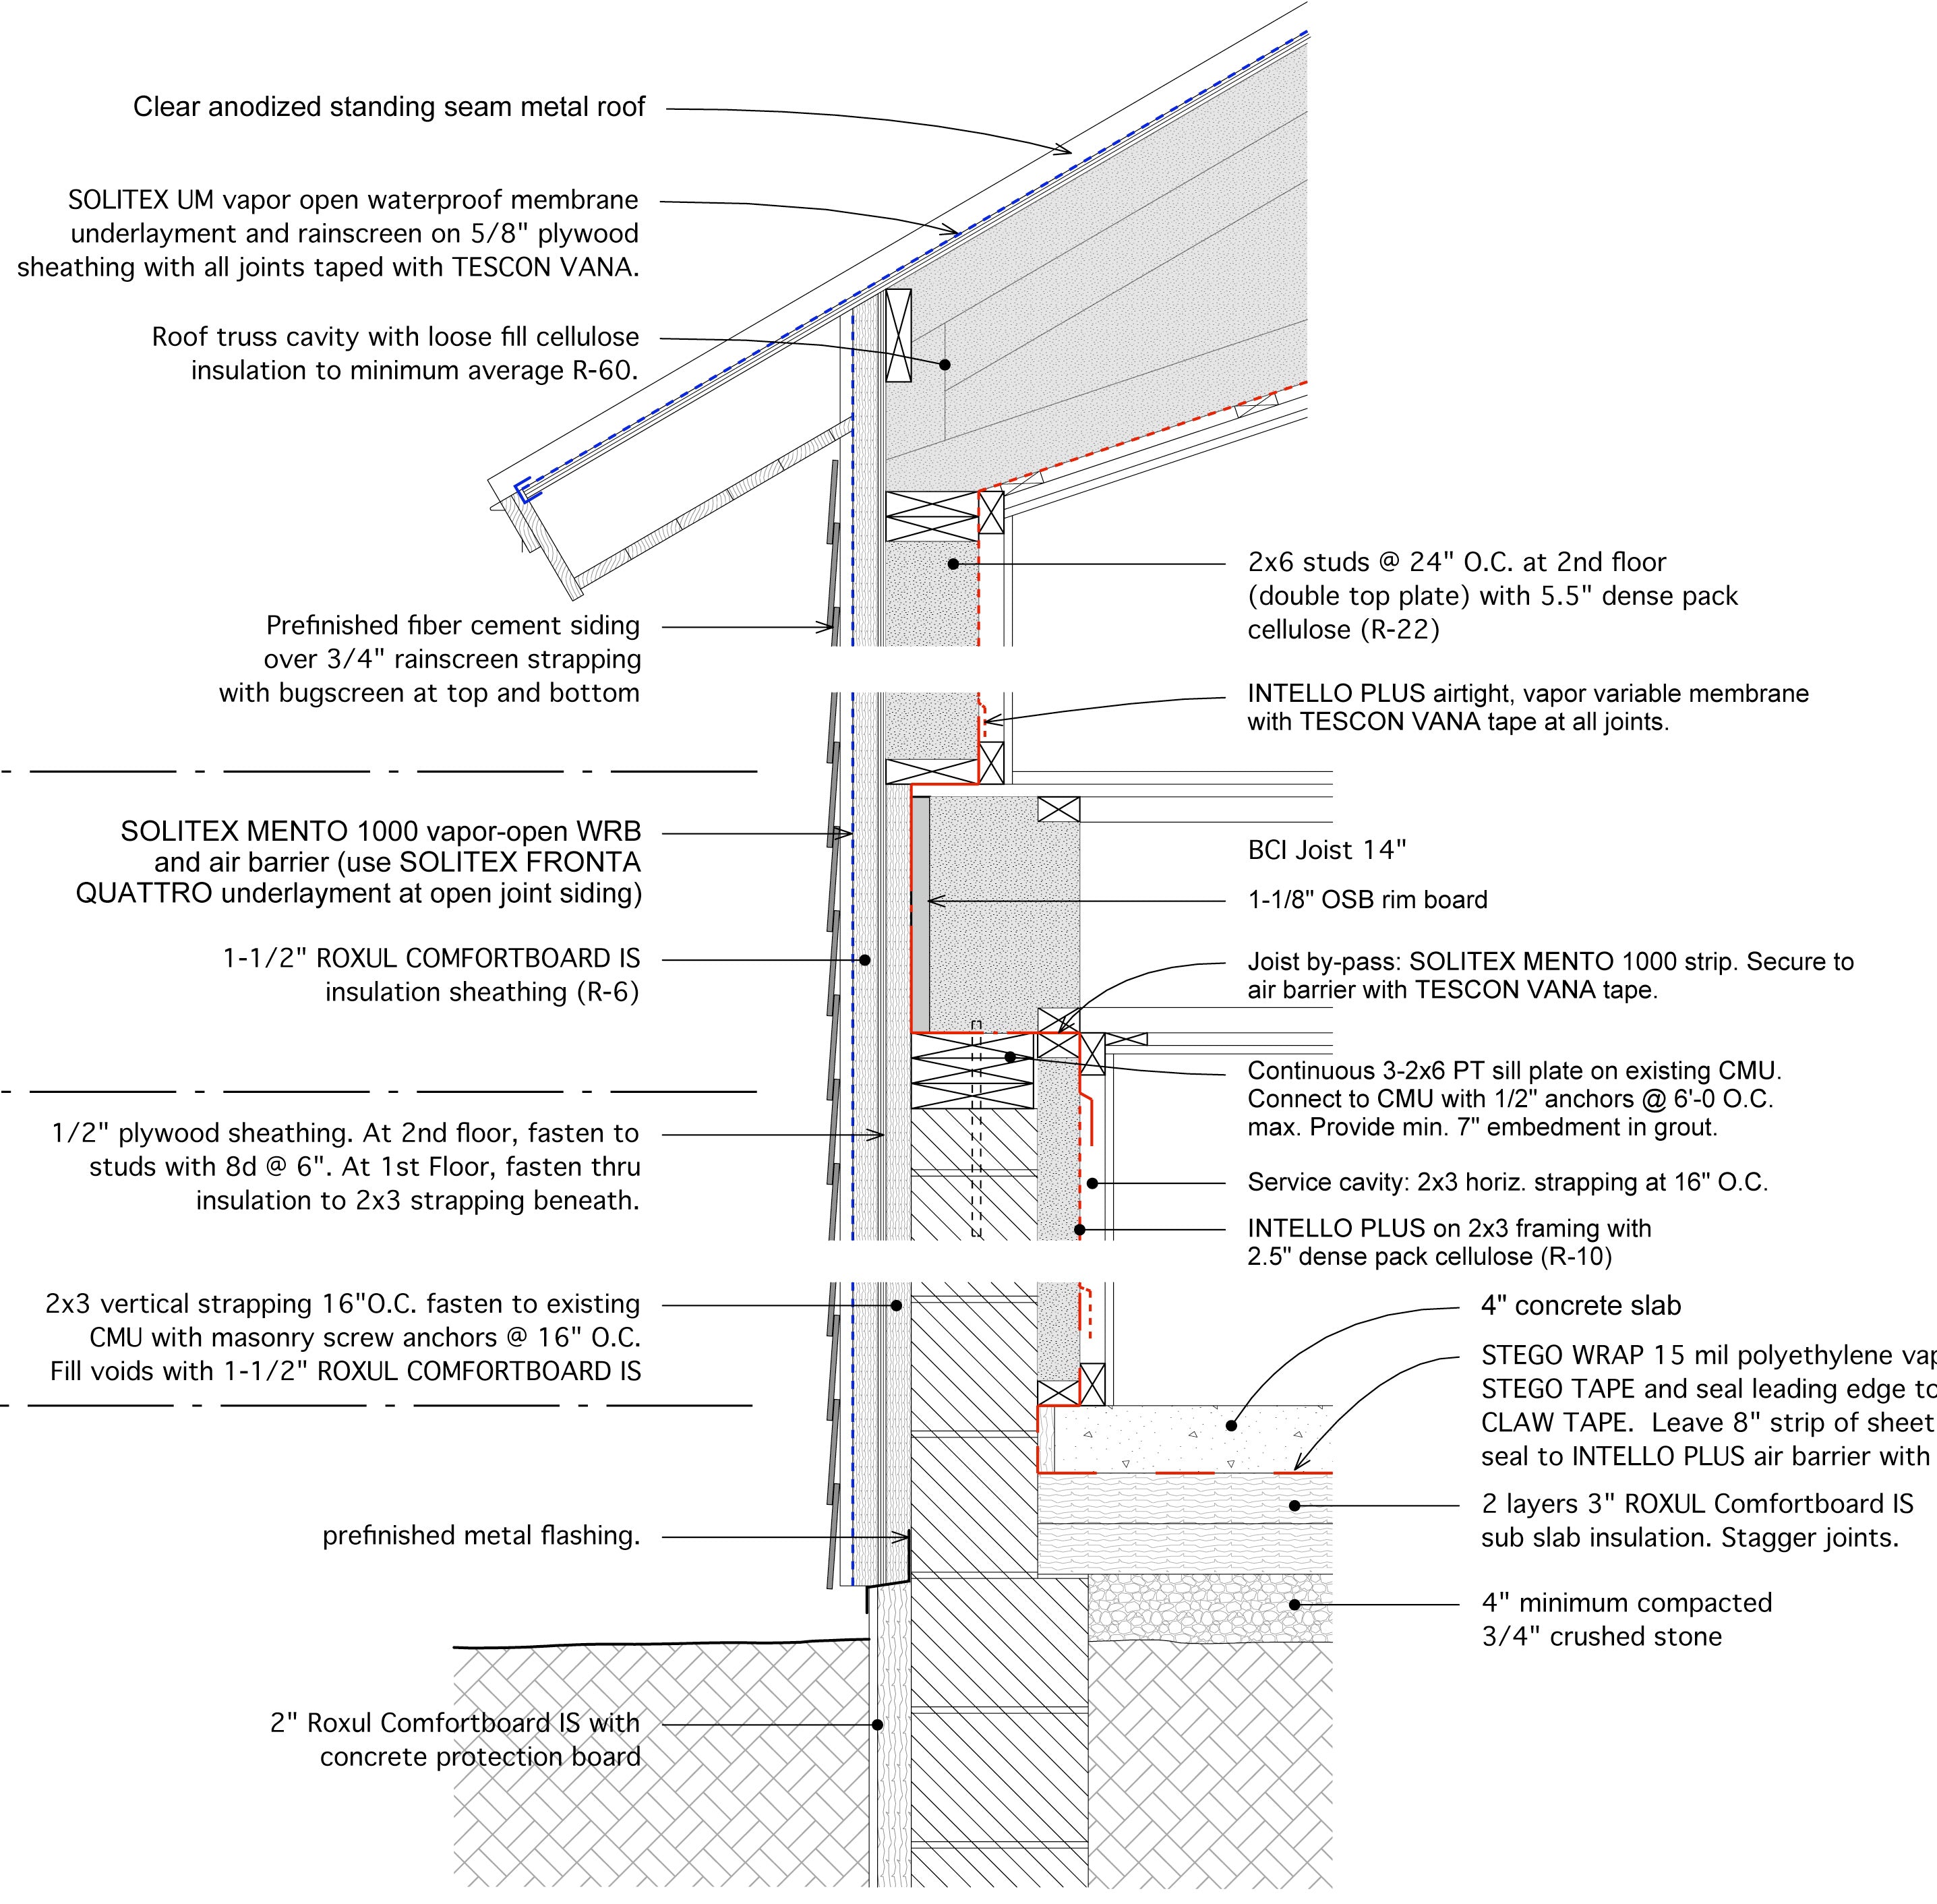 Proper Design Details for Standing Seam Metal Roofs, 2020-09-07